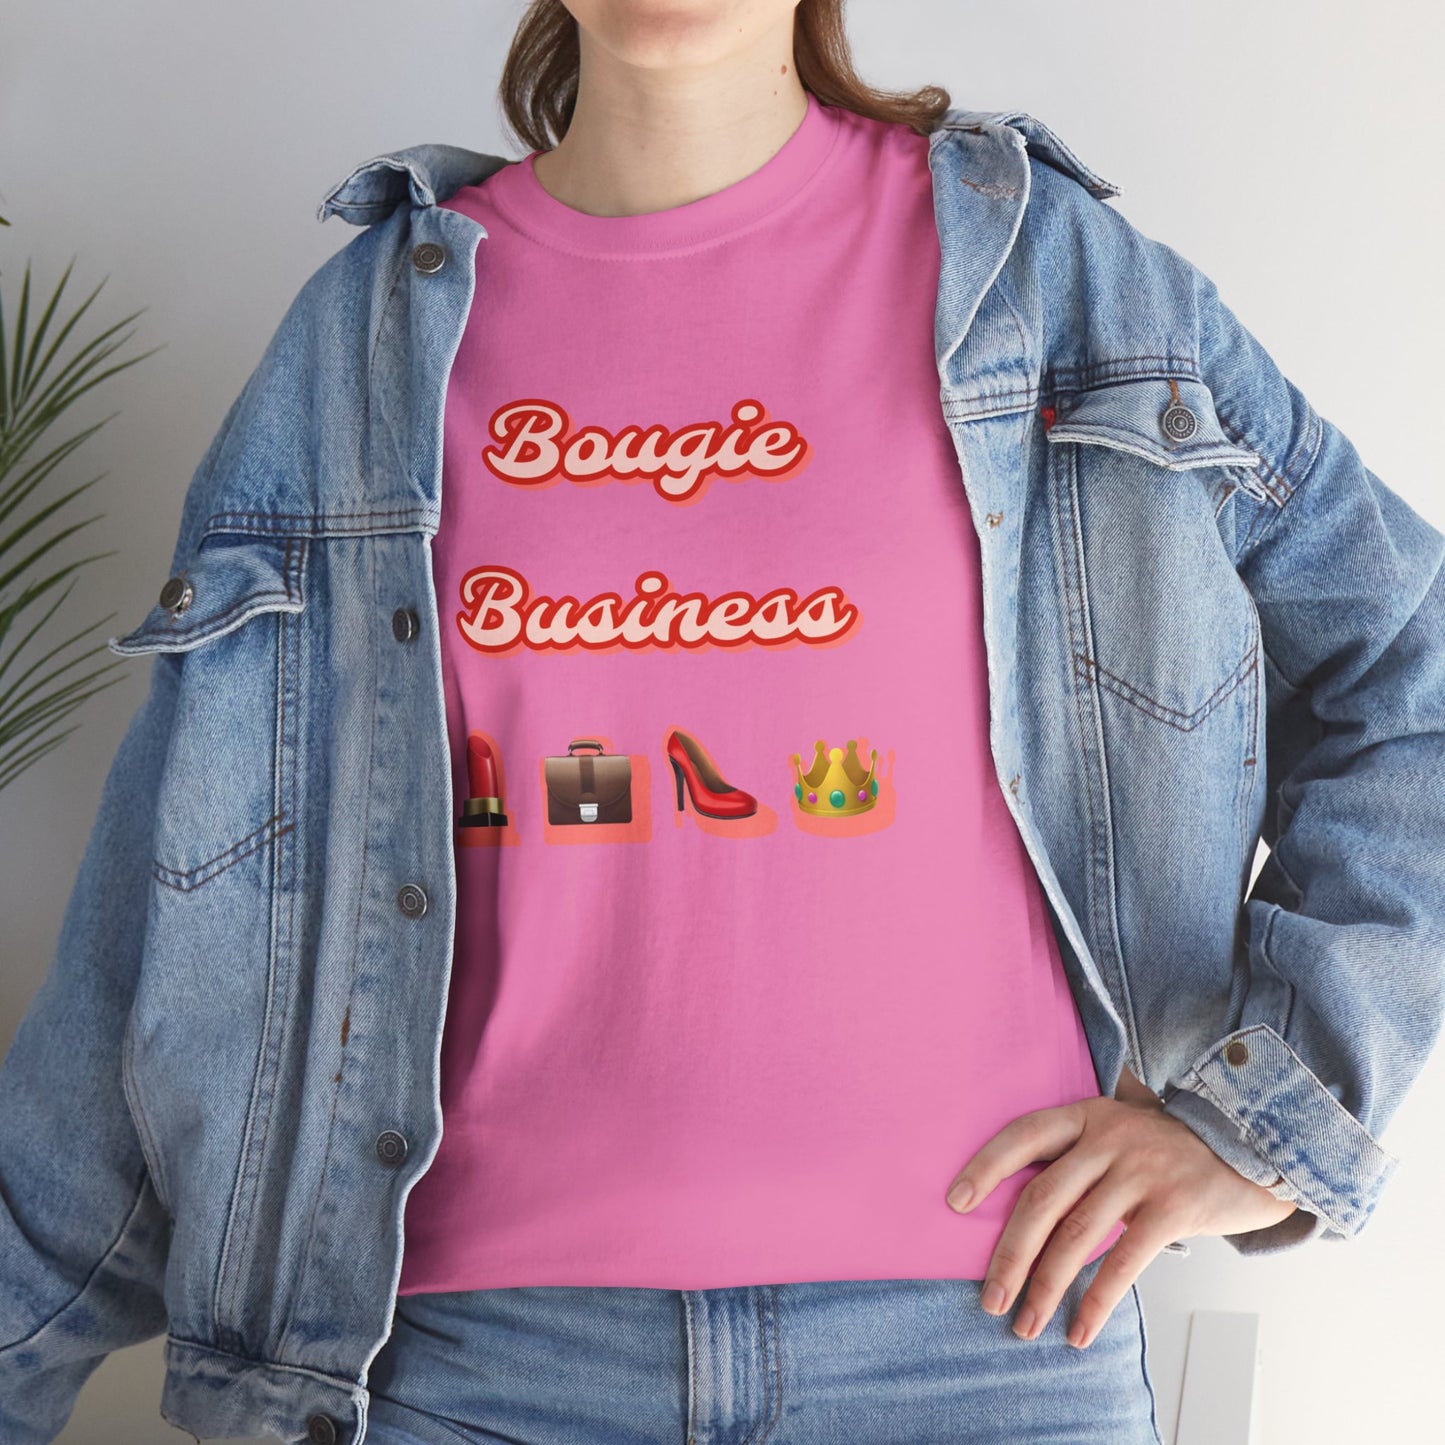 Bougie Business Emoji Tee